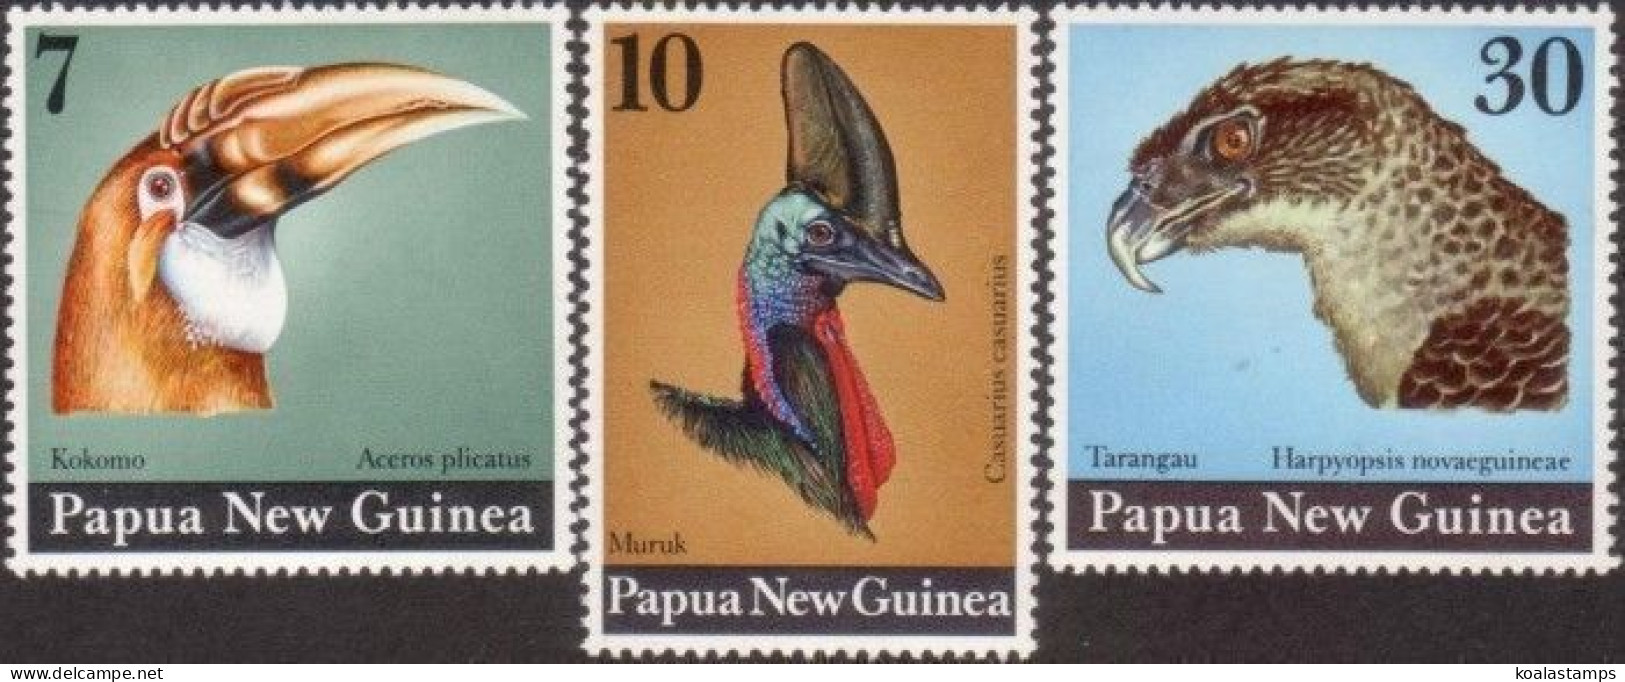 Papua New Guinea 1974 SG270-272 Large Birds Heads Set MNH - Papua New Guinea